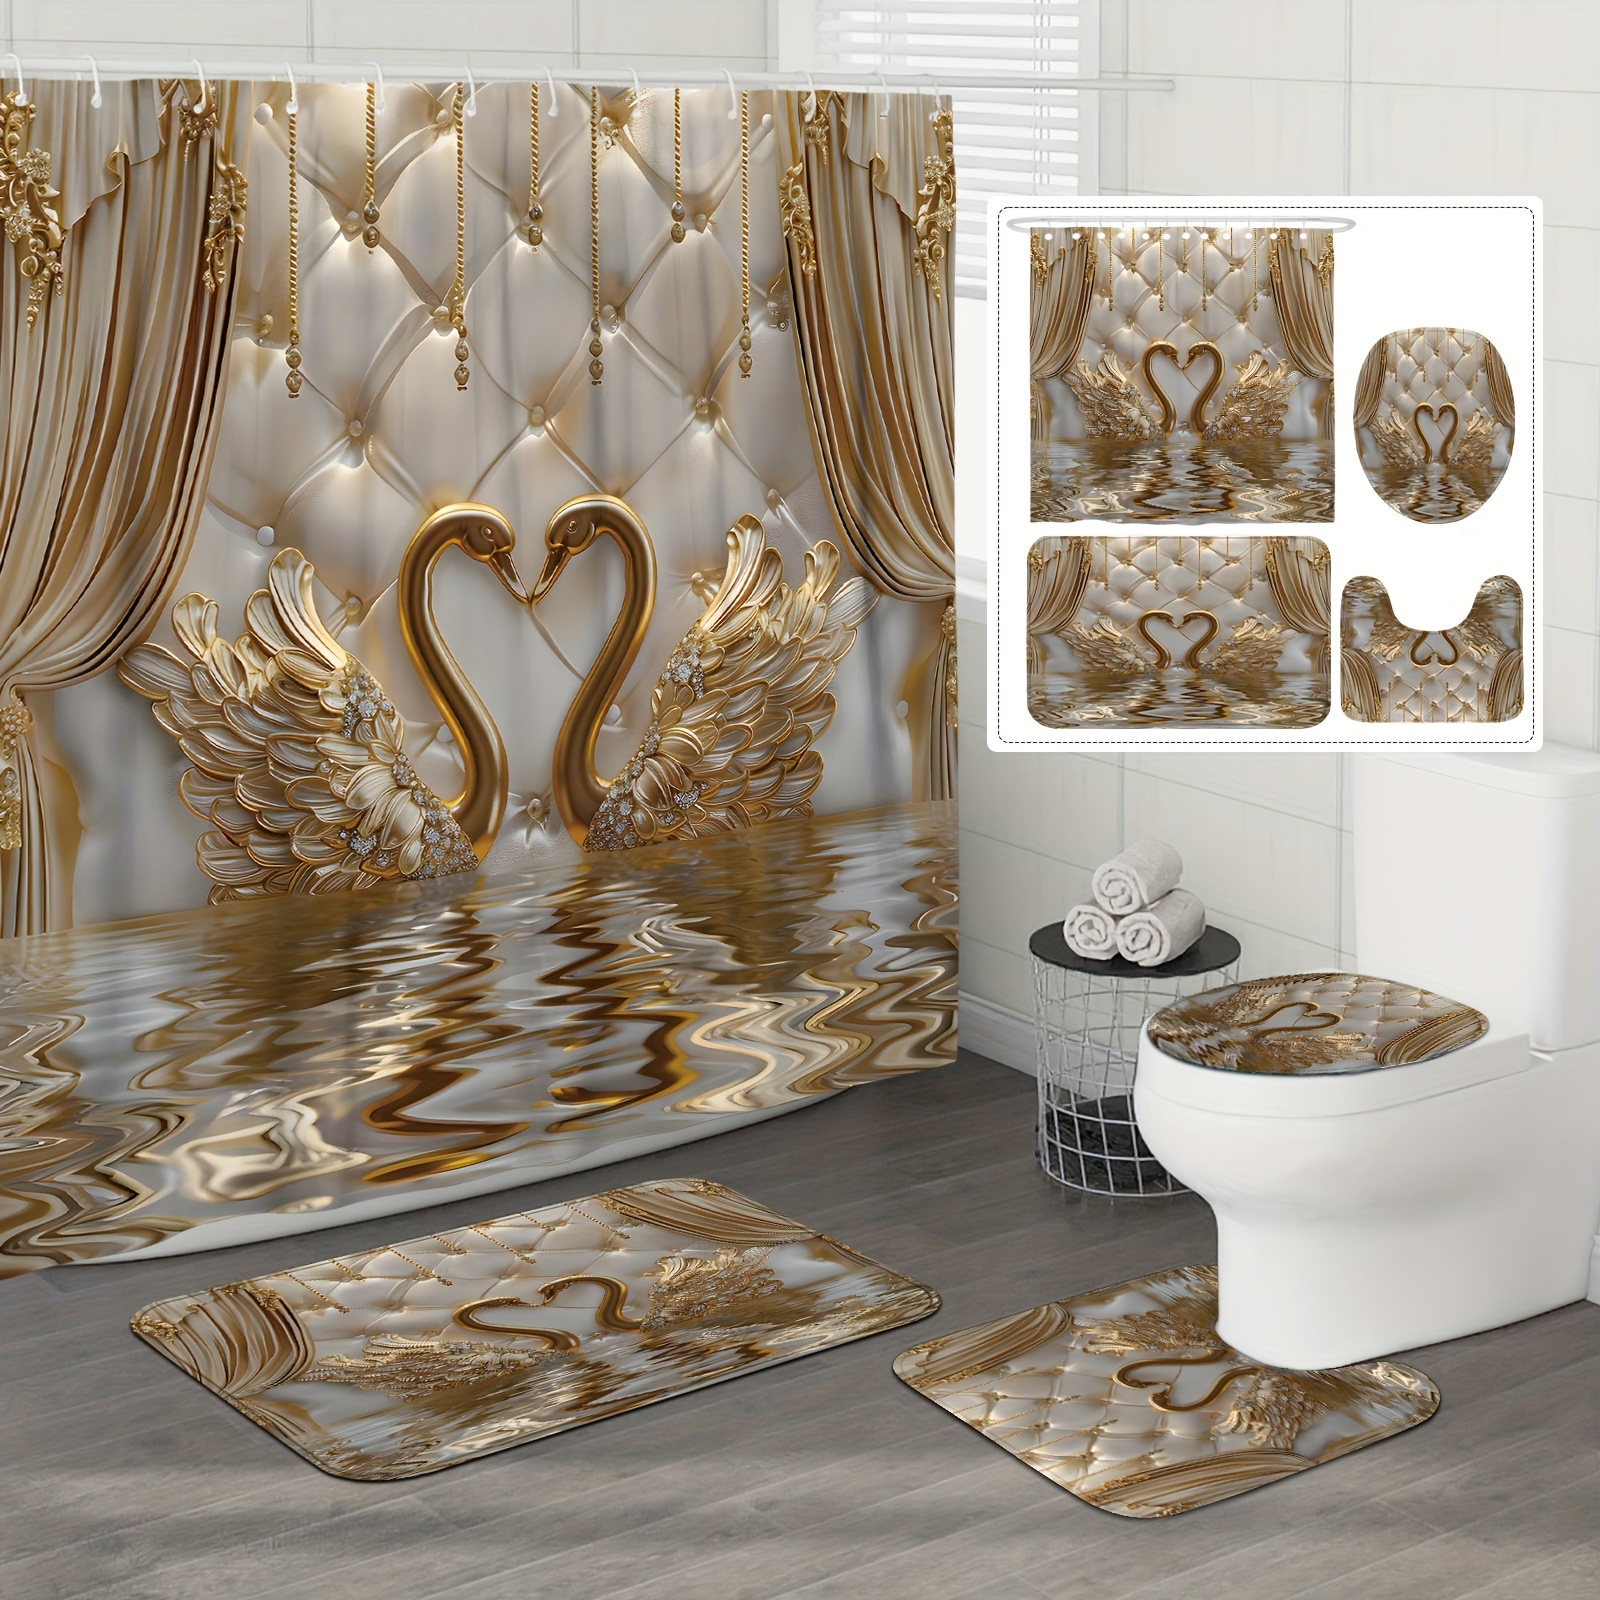 

1/4pcs Luxury 3d Swan And Mats, Waterproof With 12 Hooks, Non-slip Bathroom Rug, Toilet U-shape Mat, Toilet Lid Cover Pad, Bathroom Decor, Sets For Bathrooms